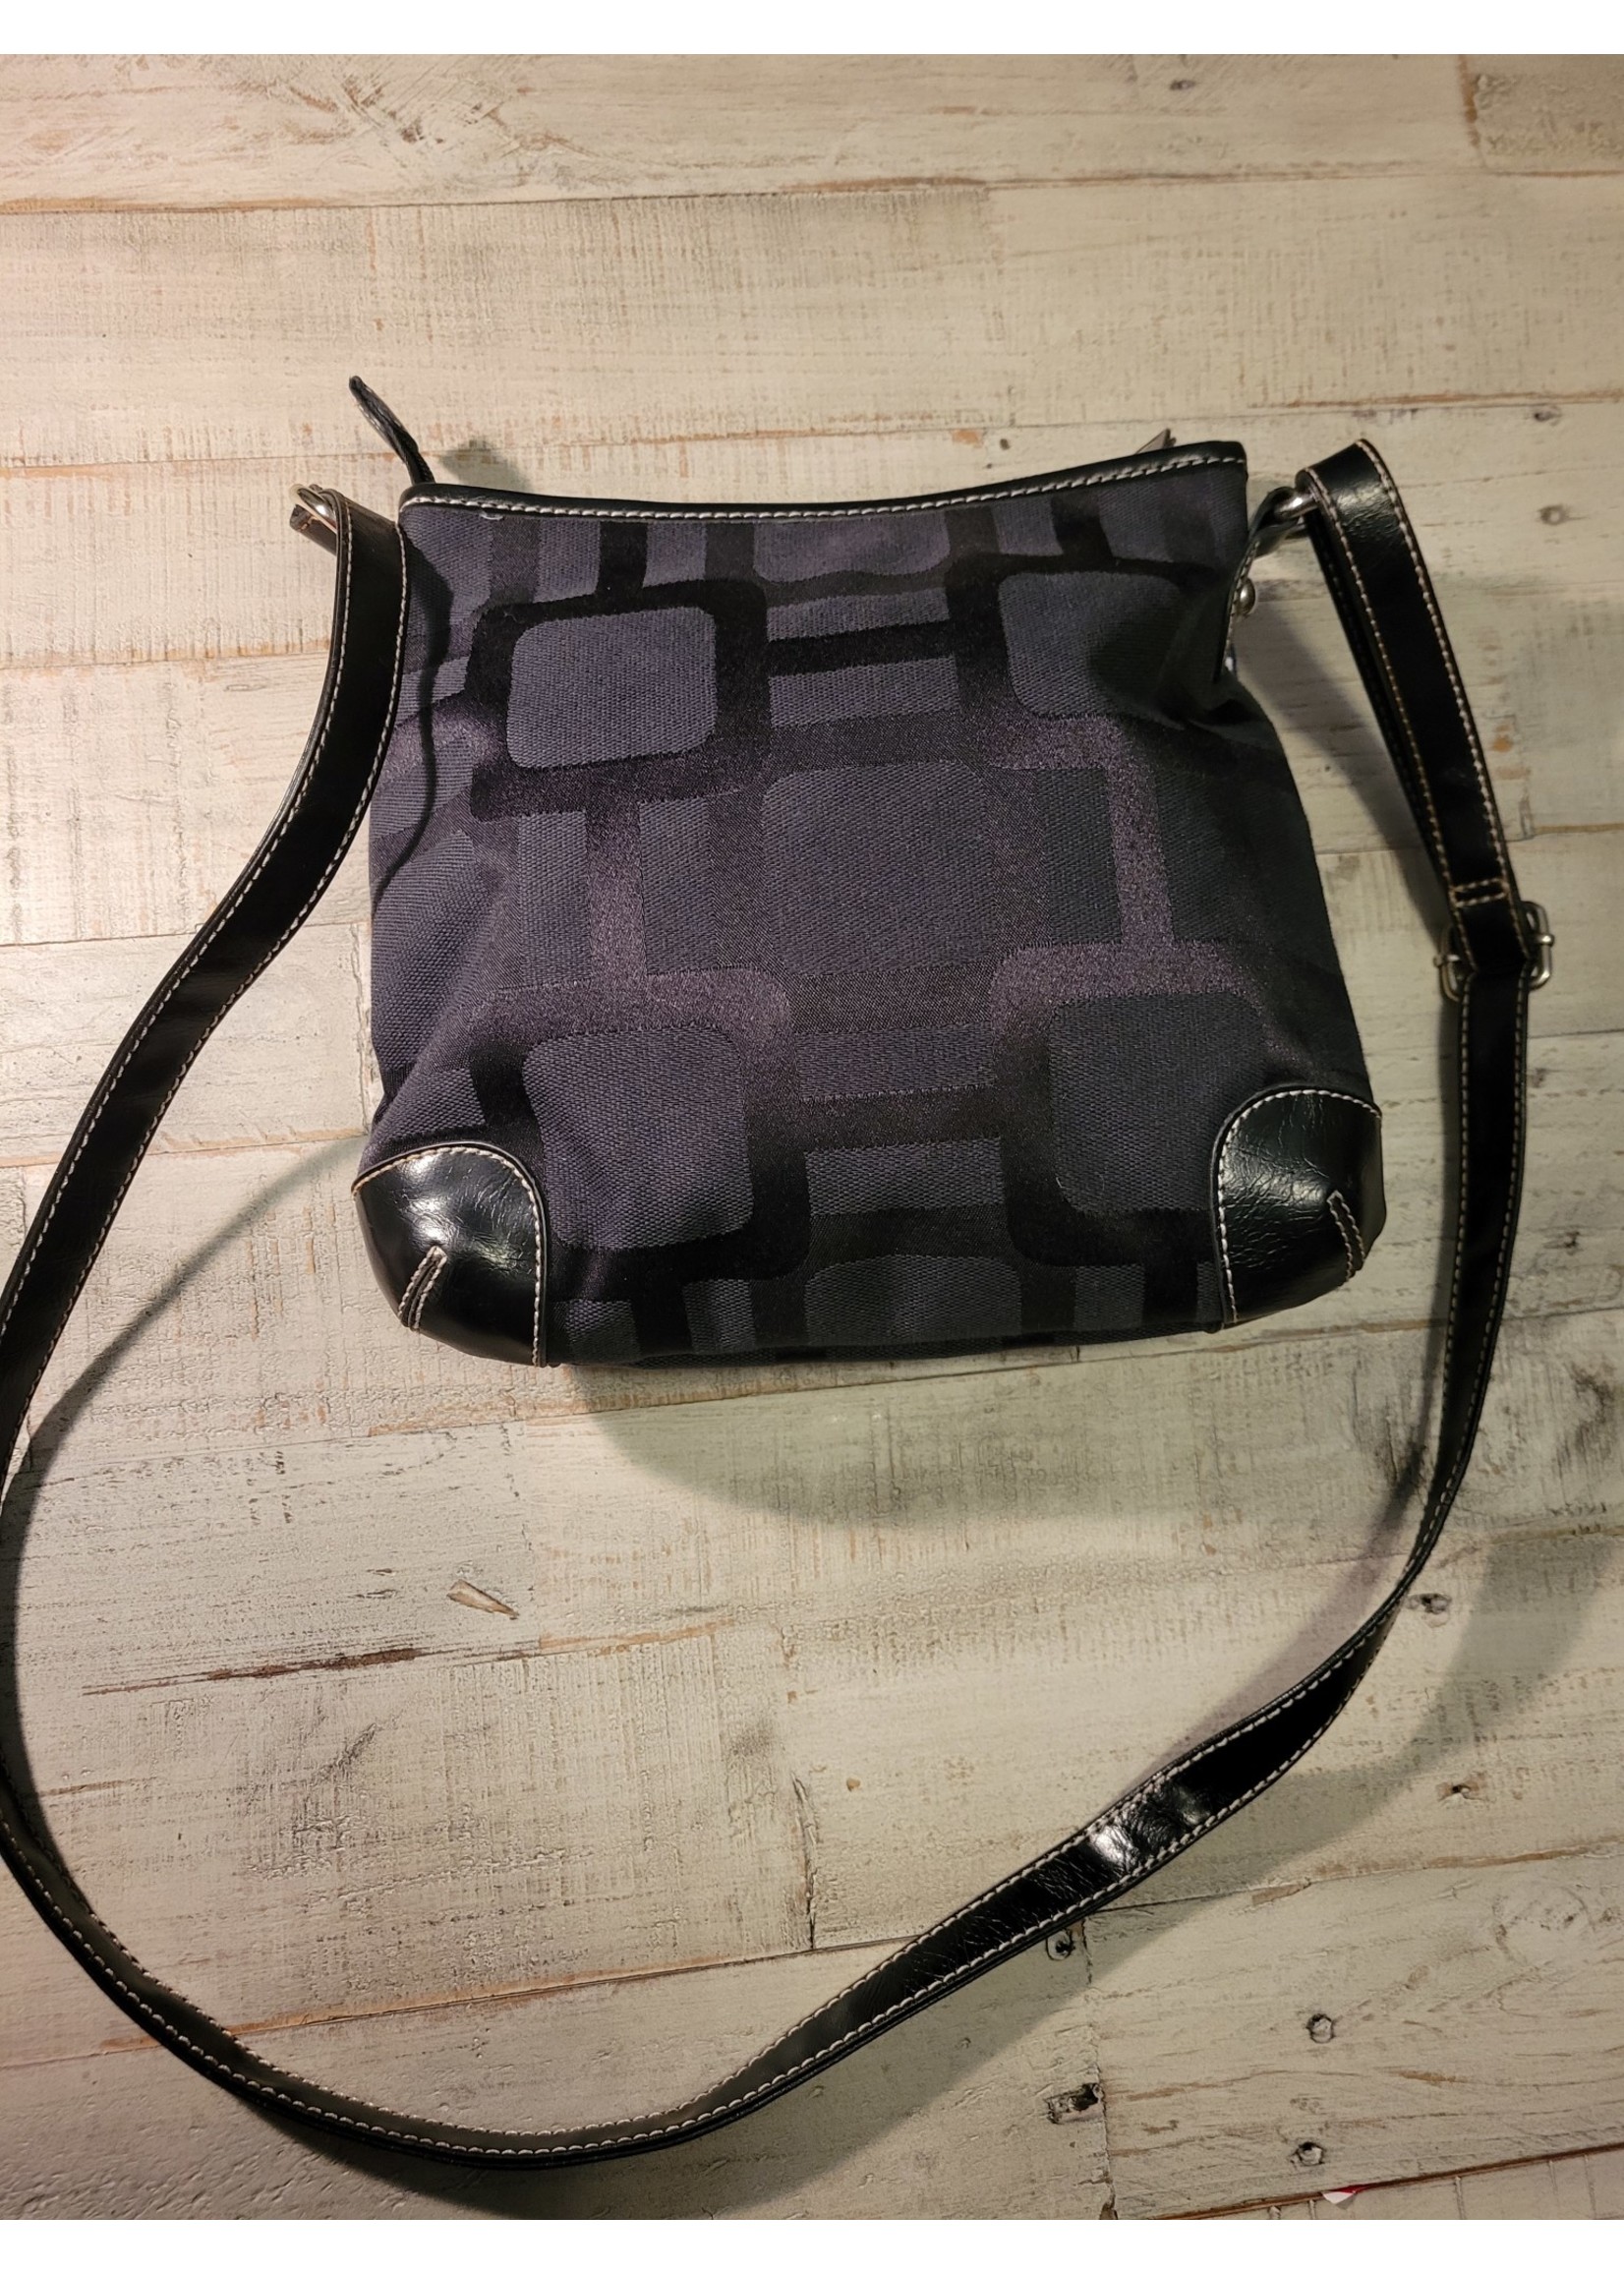 Nine West Smooth Leather Handbags | Mercari